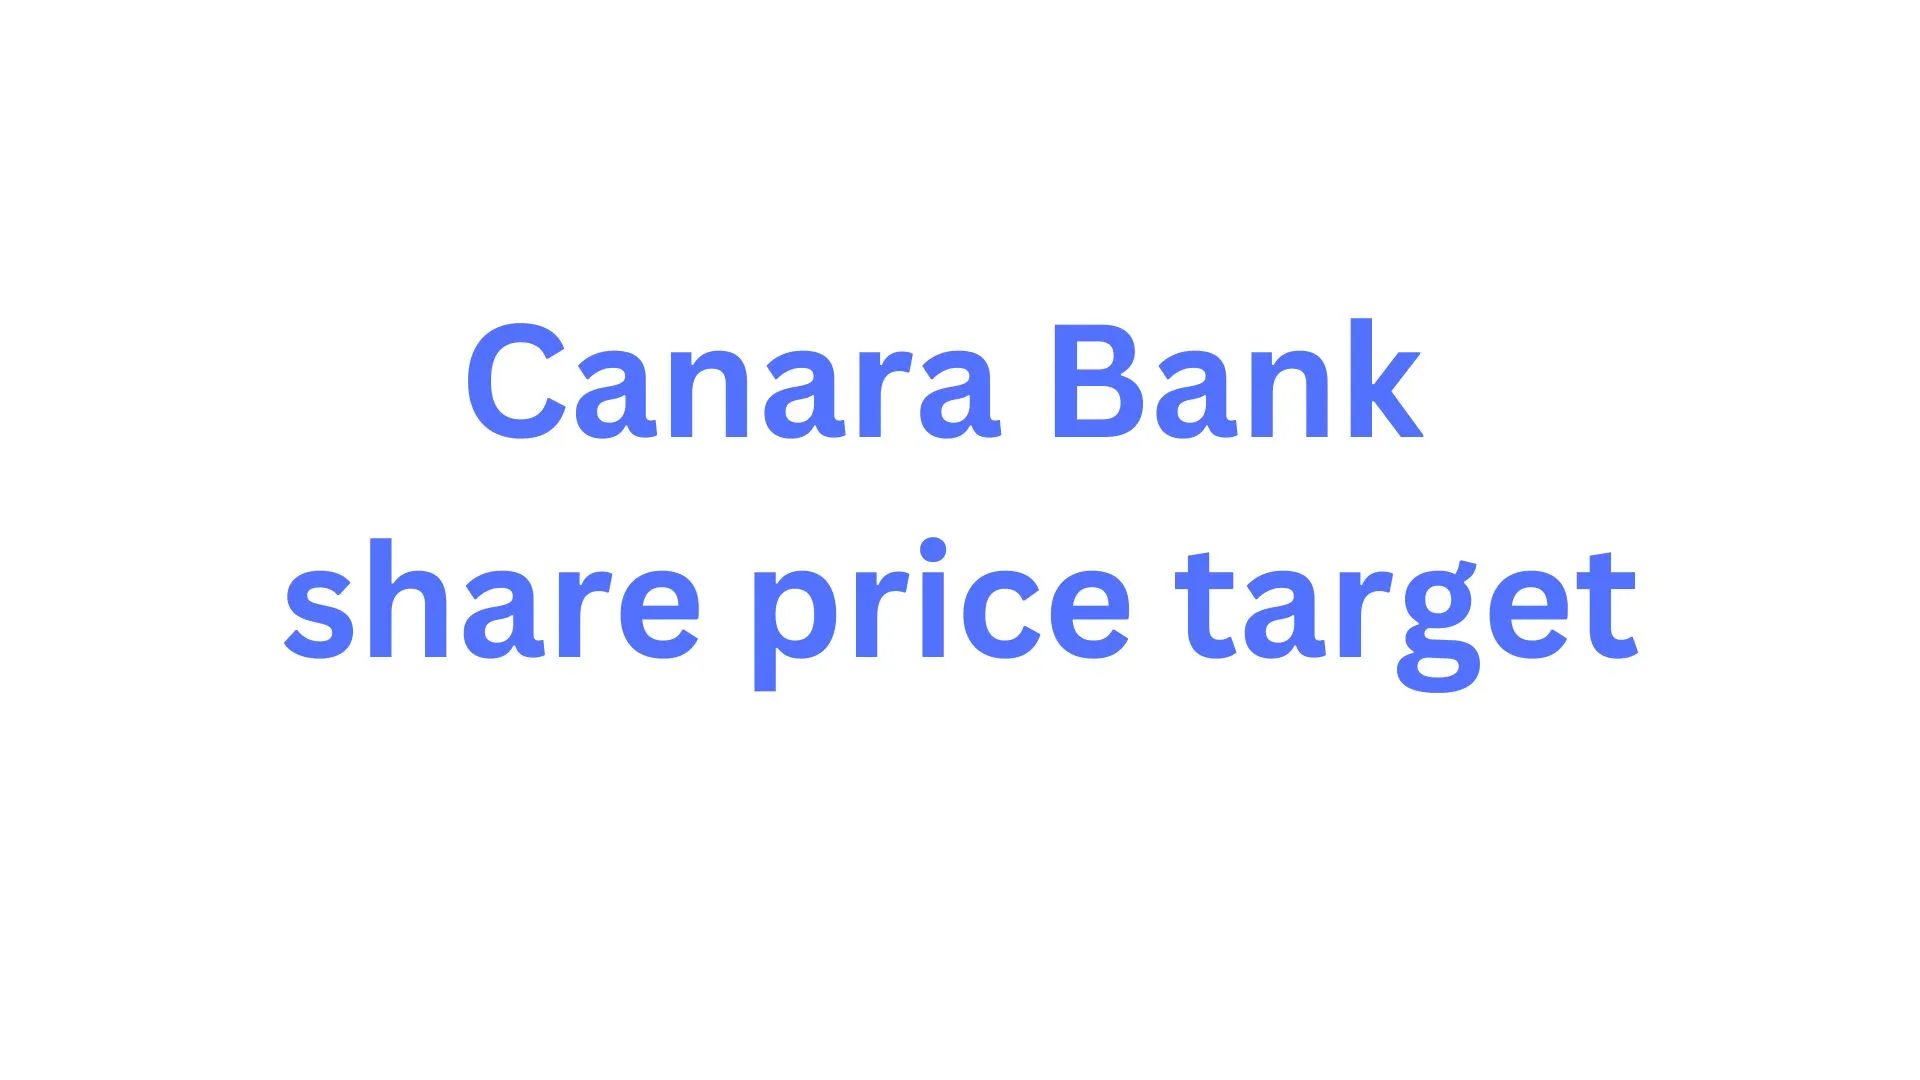 Canara Bank share price target